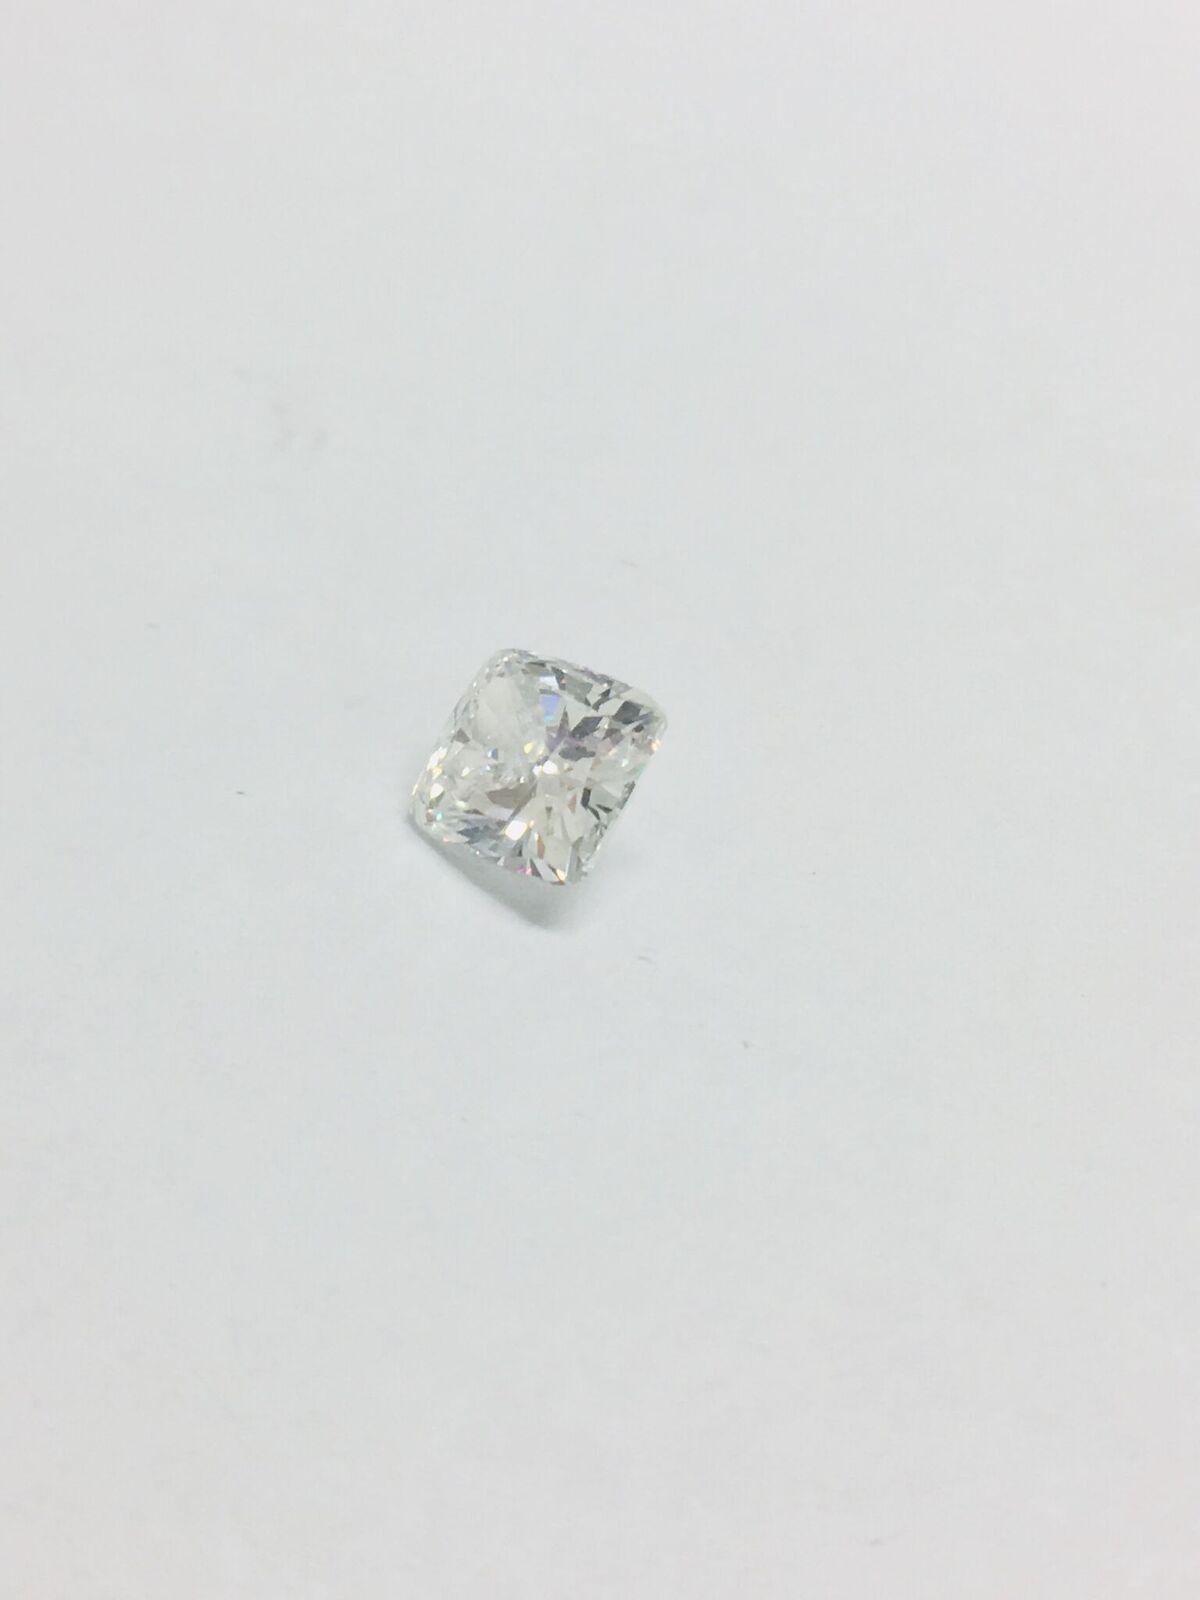 1.10ct Radiant cut natural Diamond - Image 14 of 21